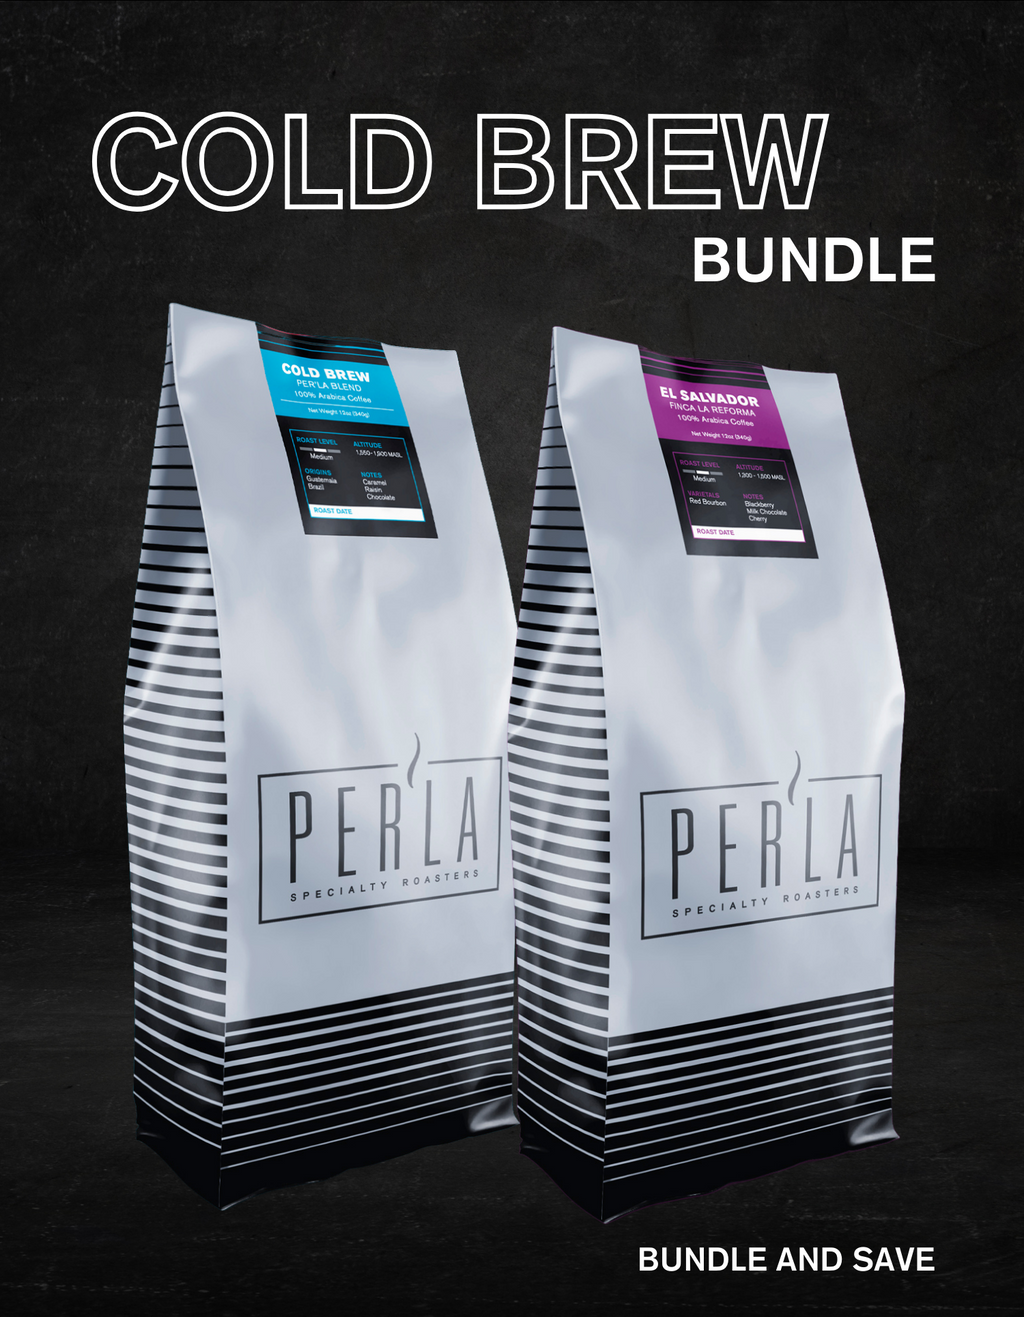 Cold Brew bundle 